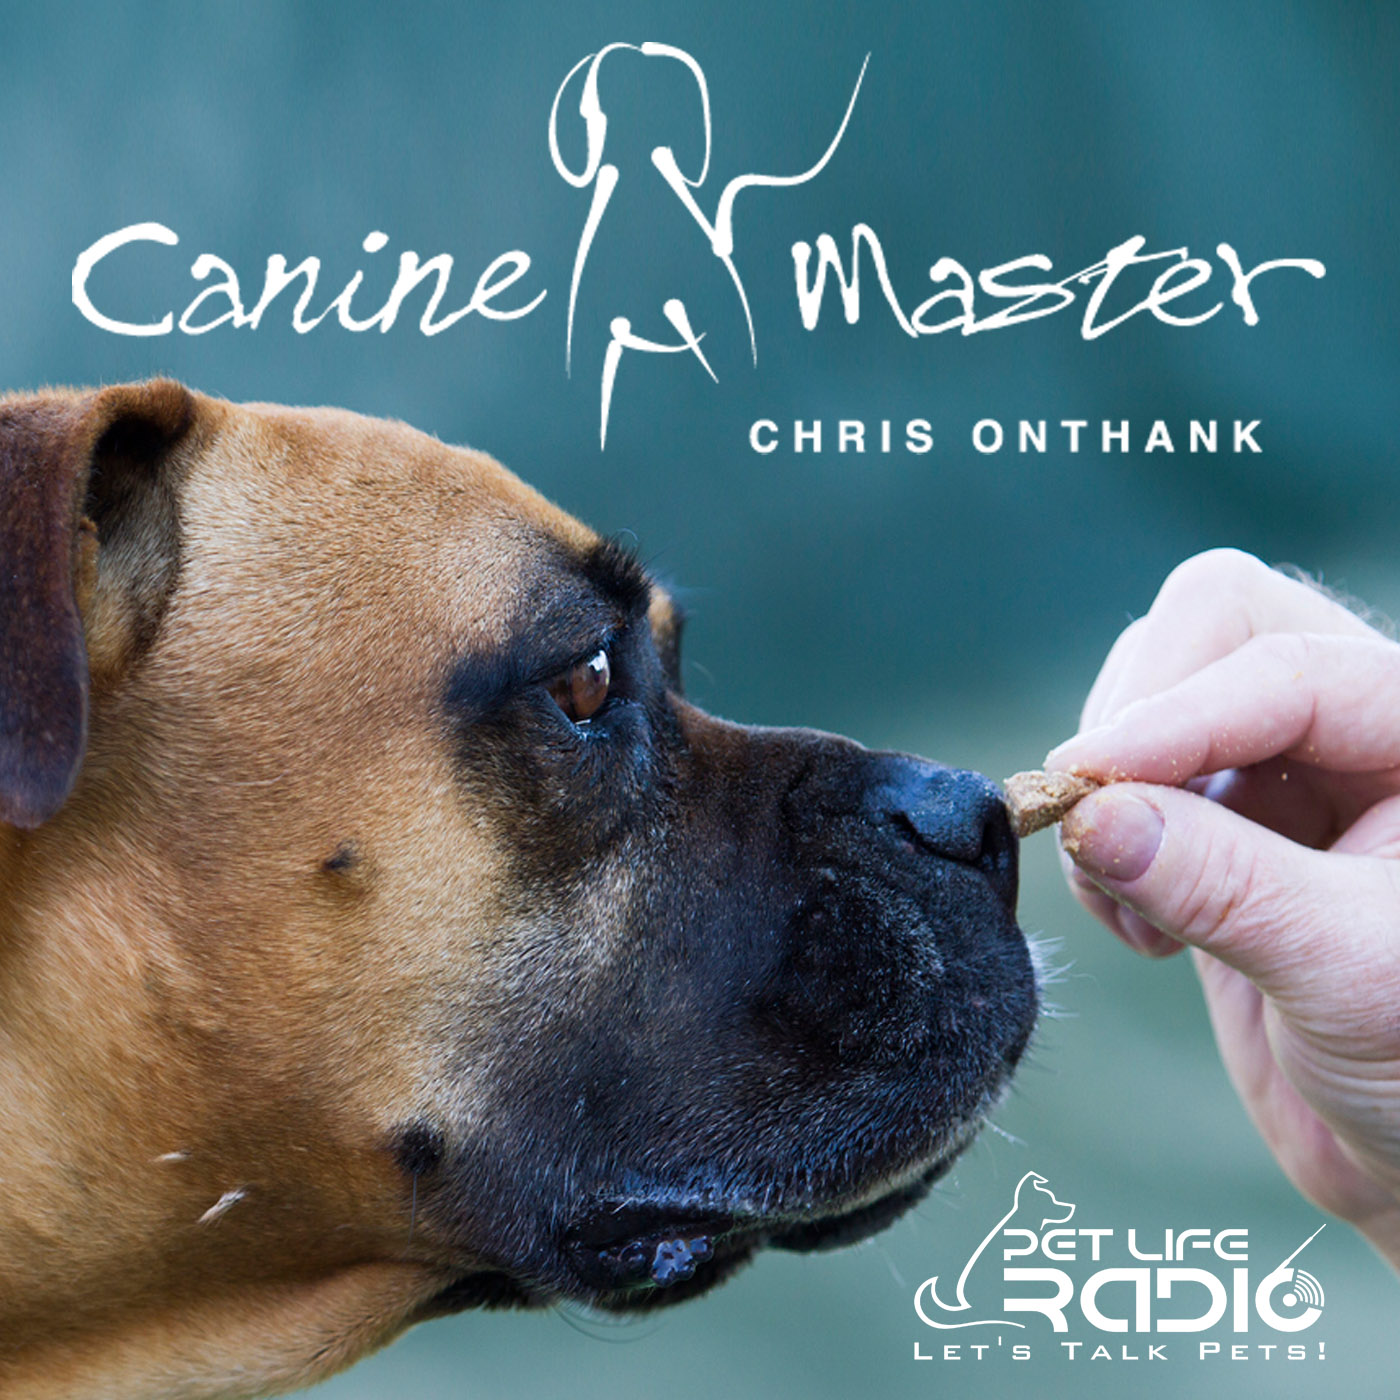 Canine Master - Dog training and behavior on Pet Life Radio (PetLifeRadio.com)